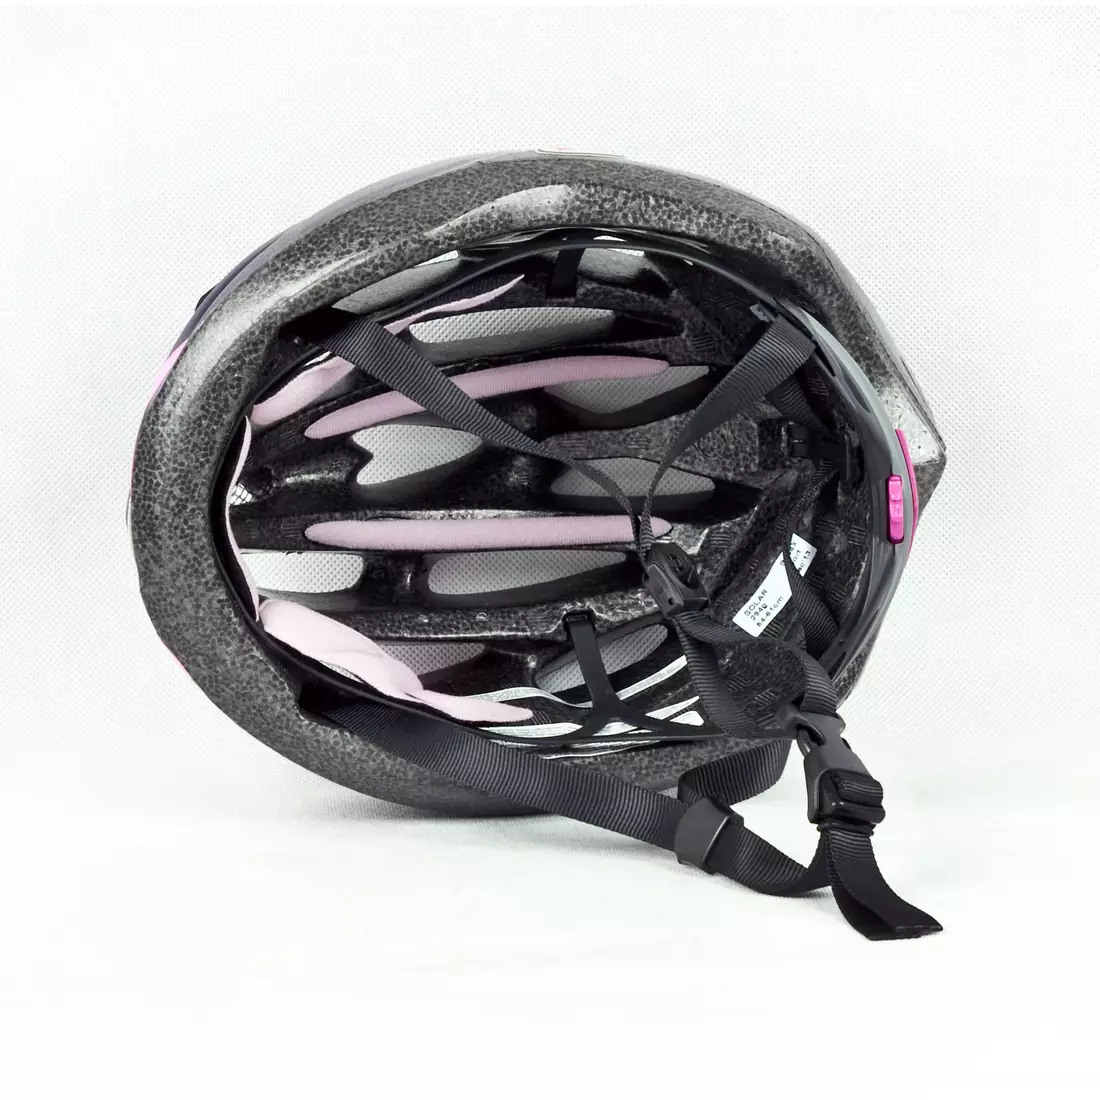 BELL SOLAR – Damen-Fahrradhelm, Lila und Pink